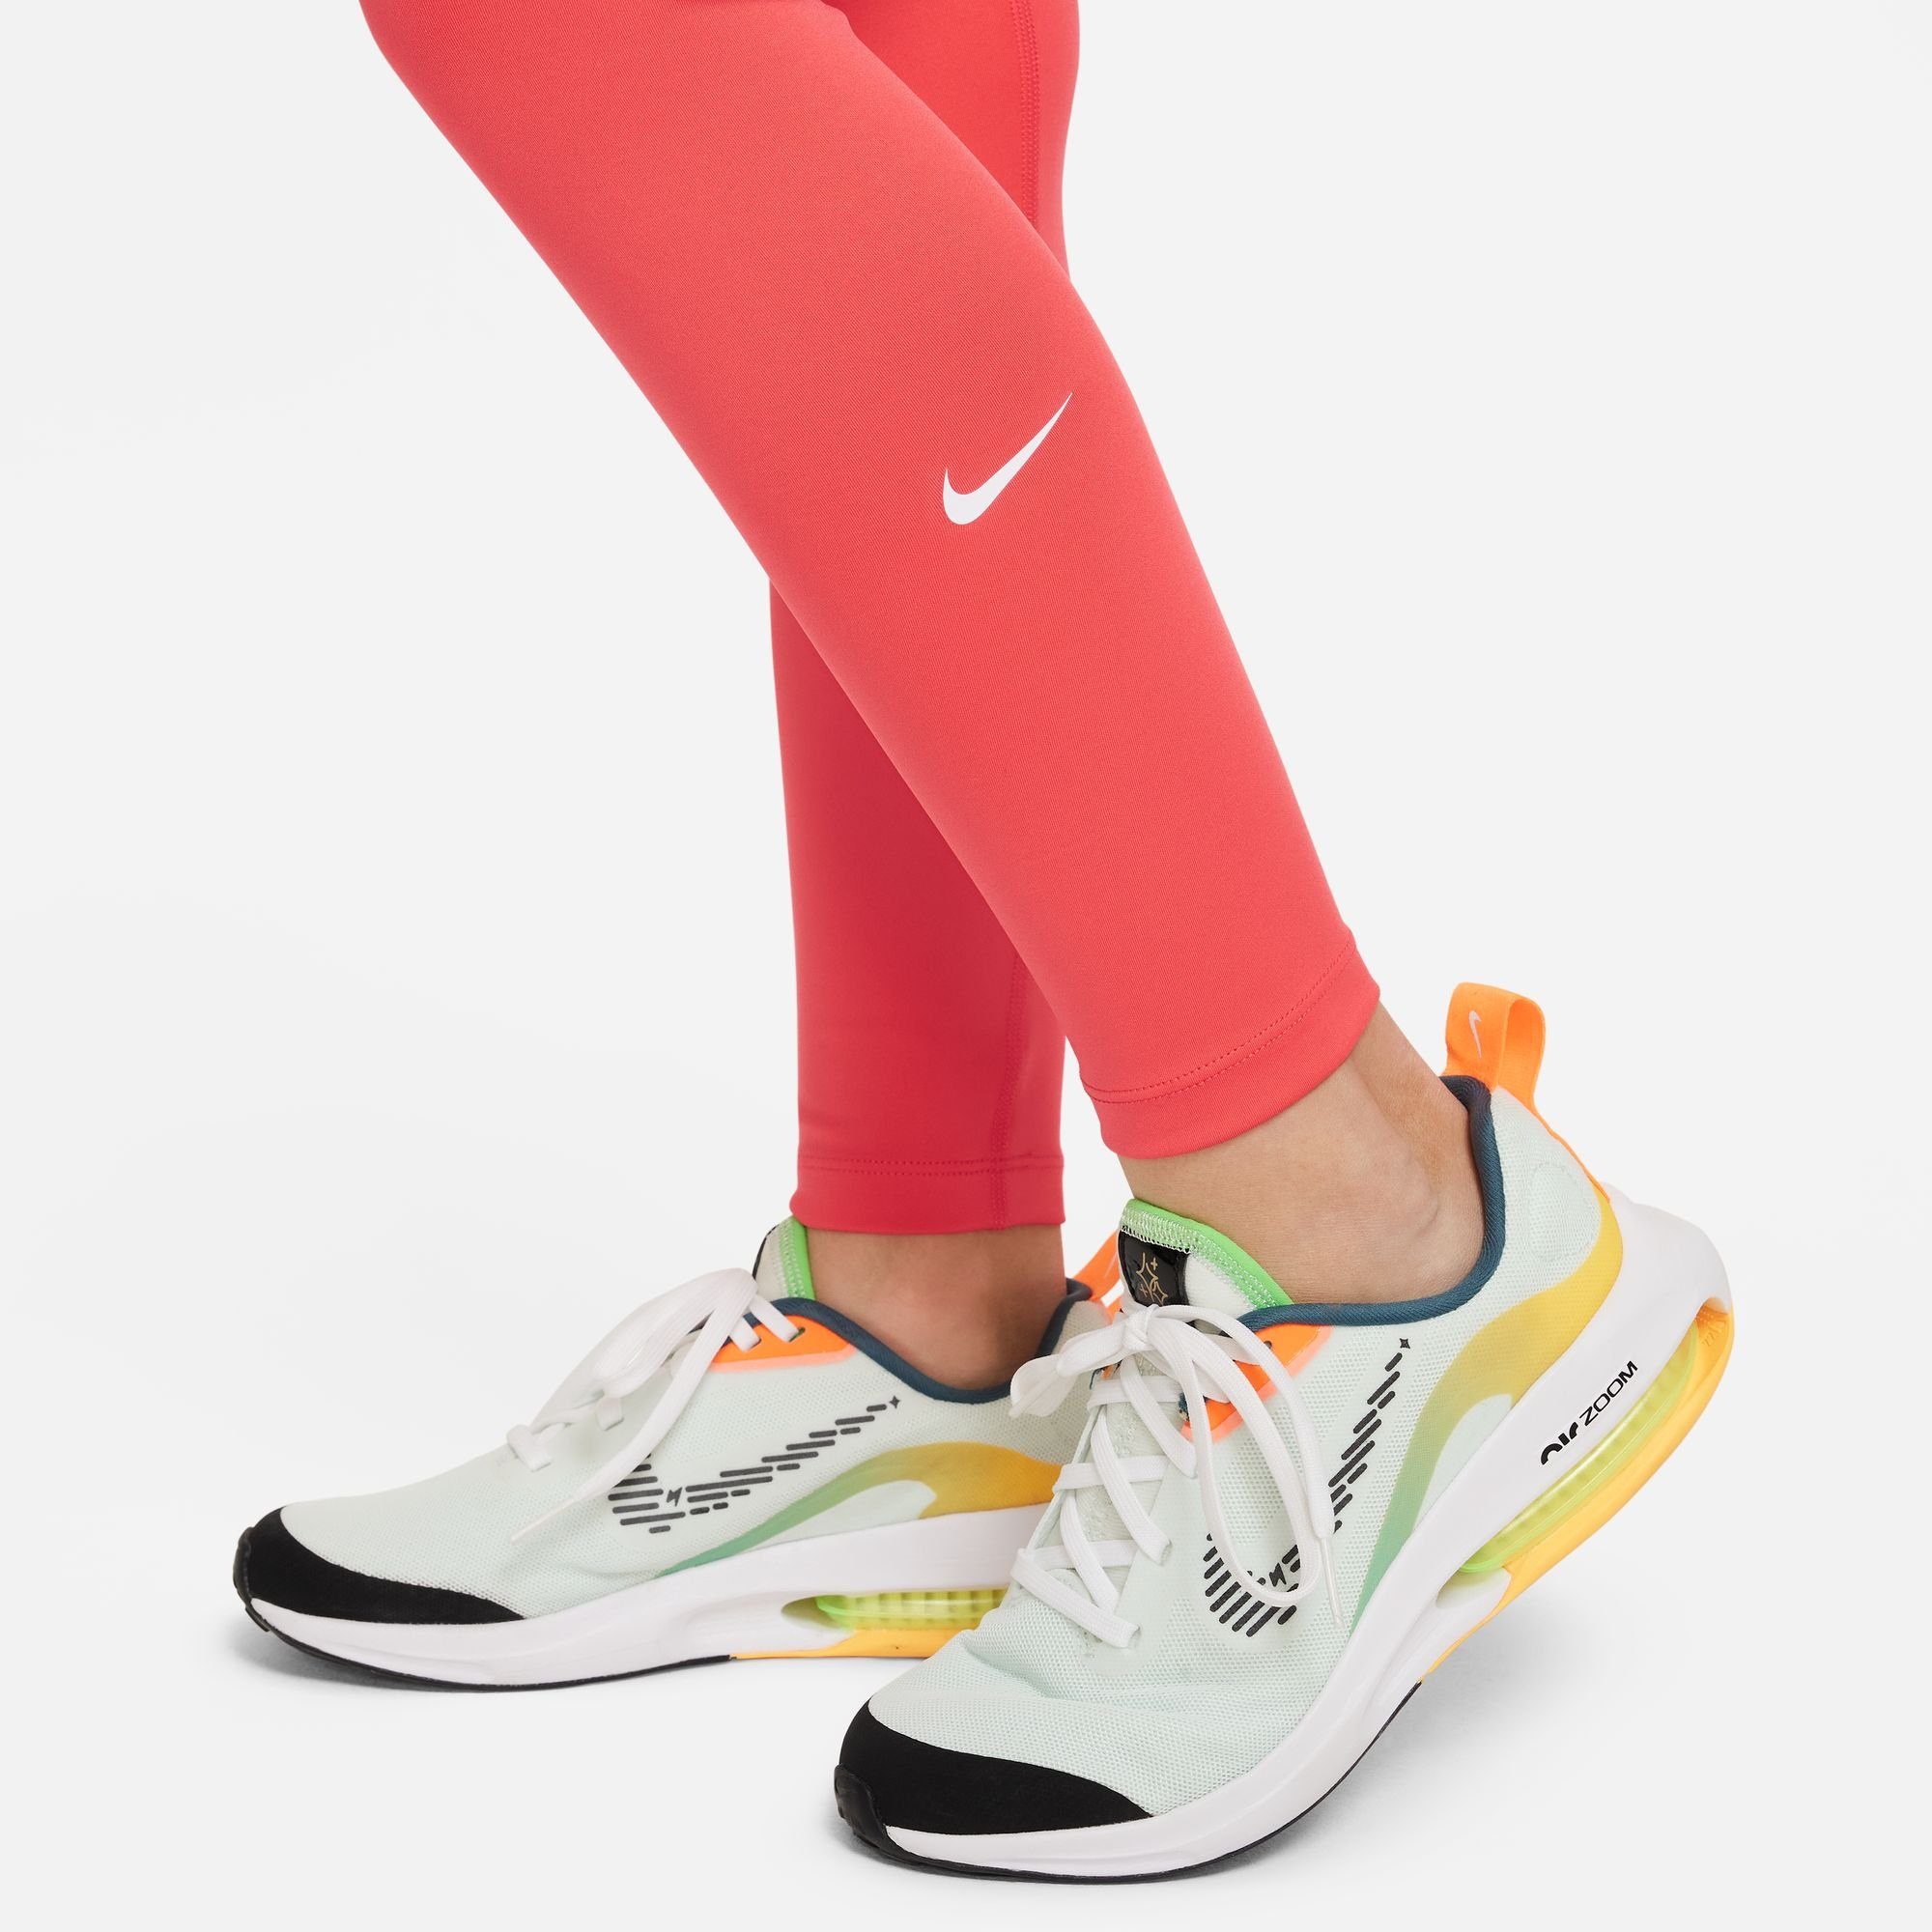 GLOW/WHITE BIG (GIRLS) KIDS' EMBER Nike DRI-FIT LEGGINGS ONE Trainingstights